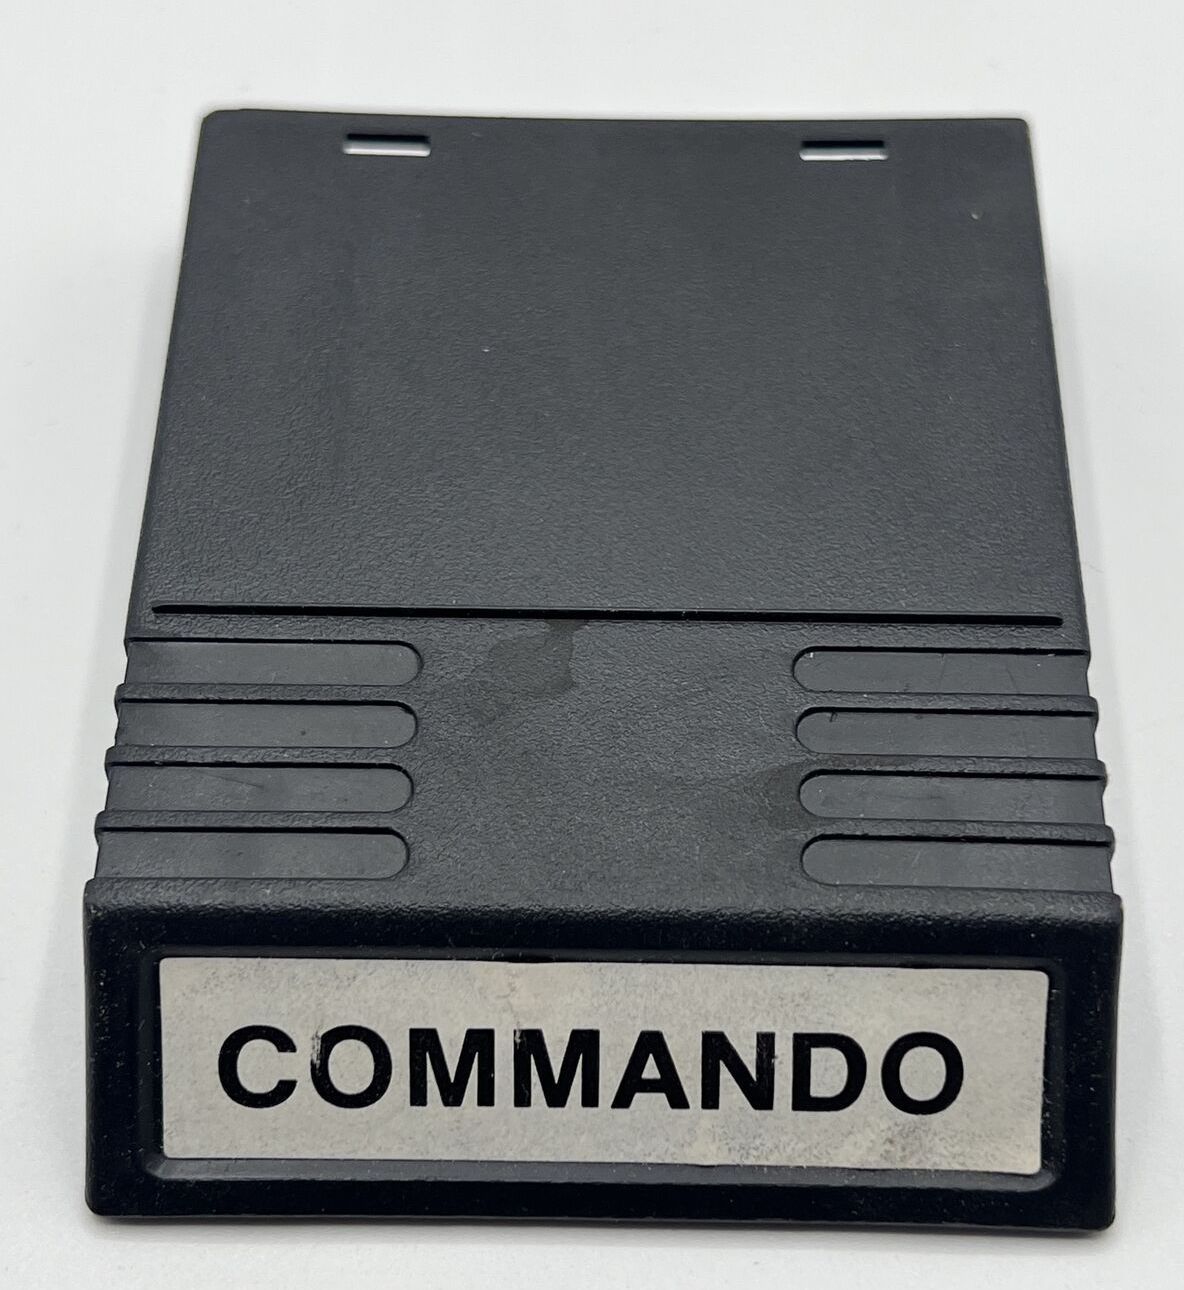 Commando - Intellivision